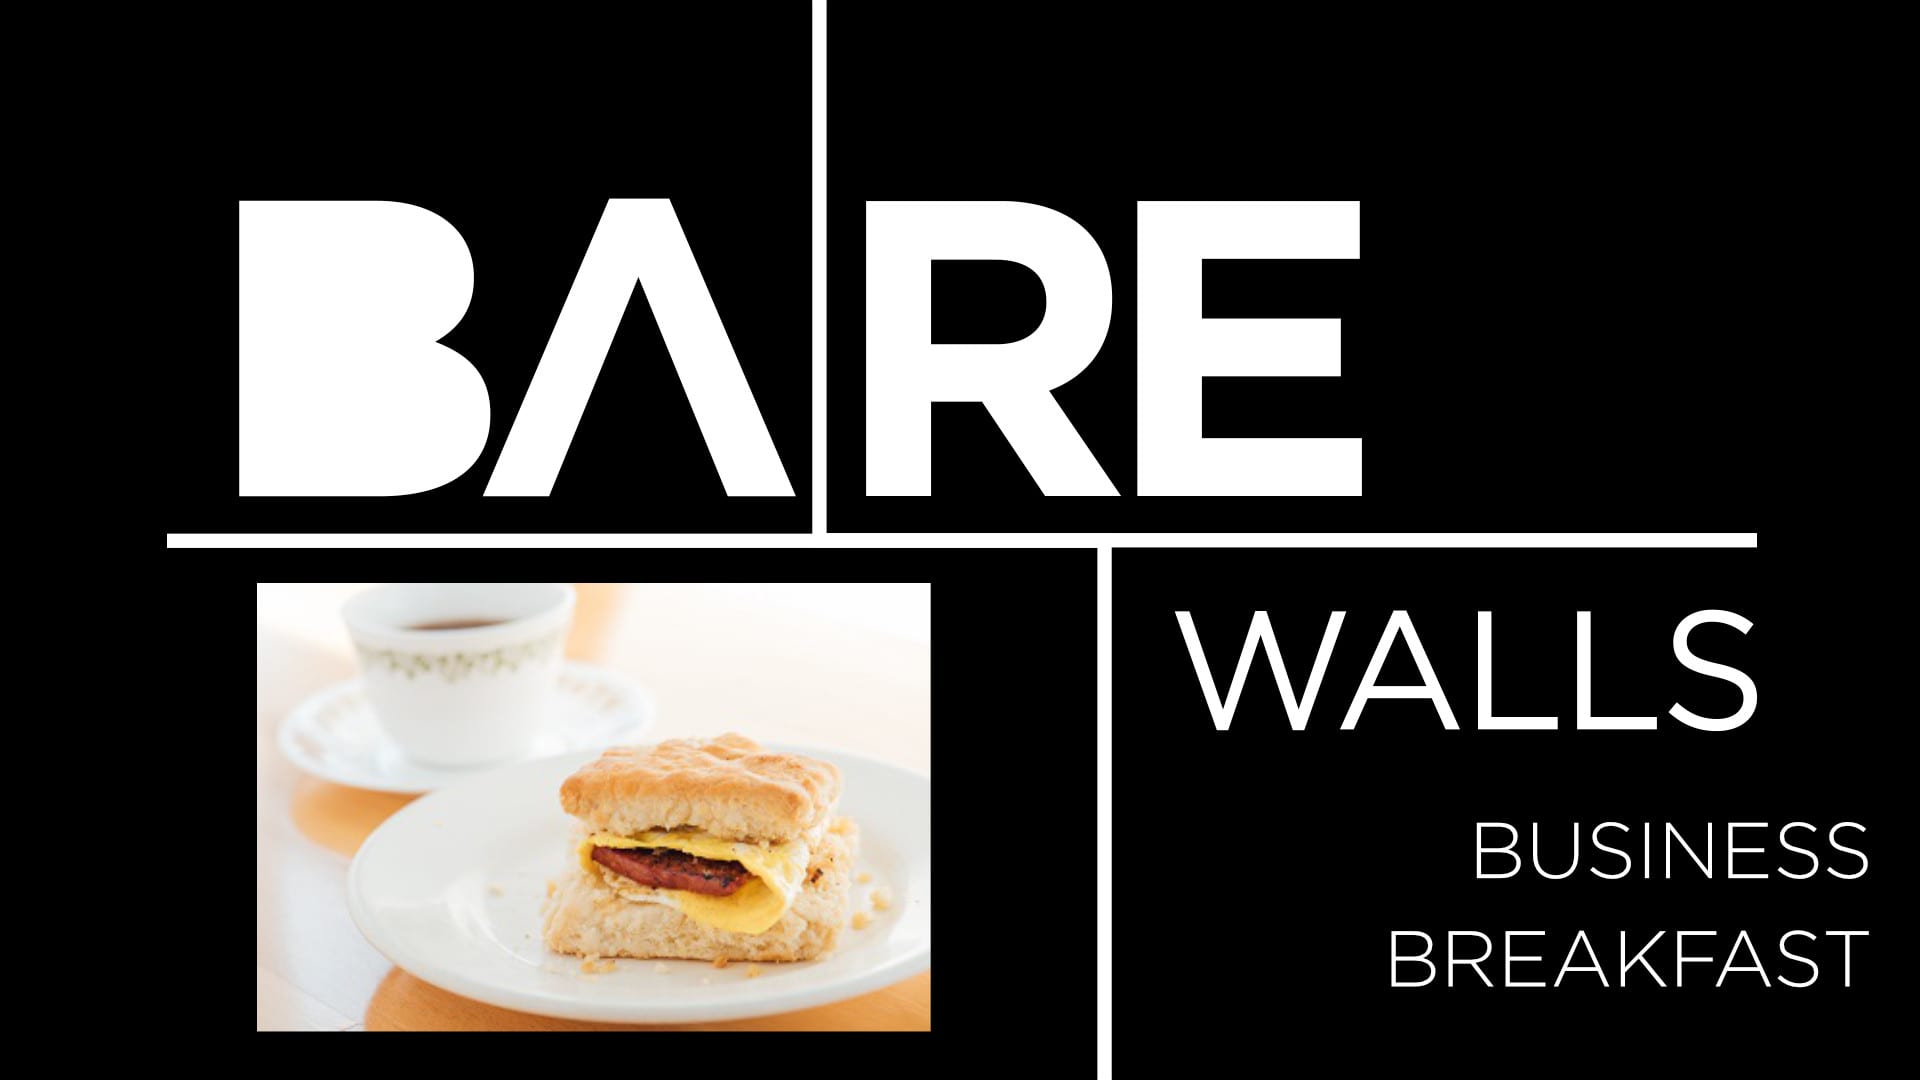 barewalls business breakfast